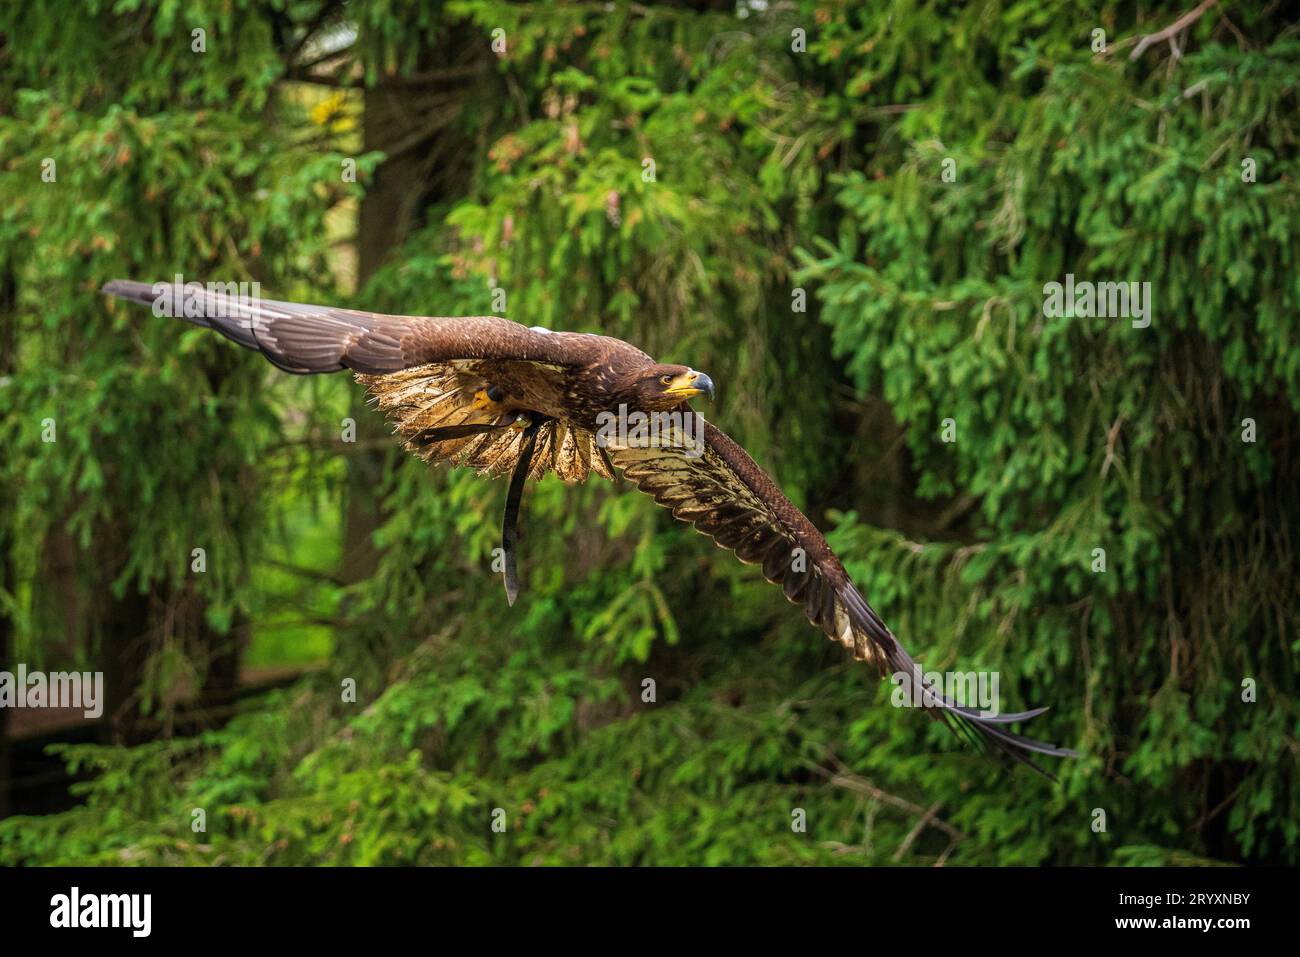 A majestic eagle in flight Stock Photo